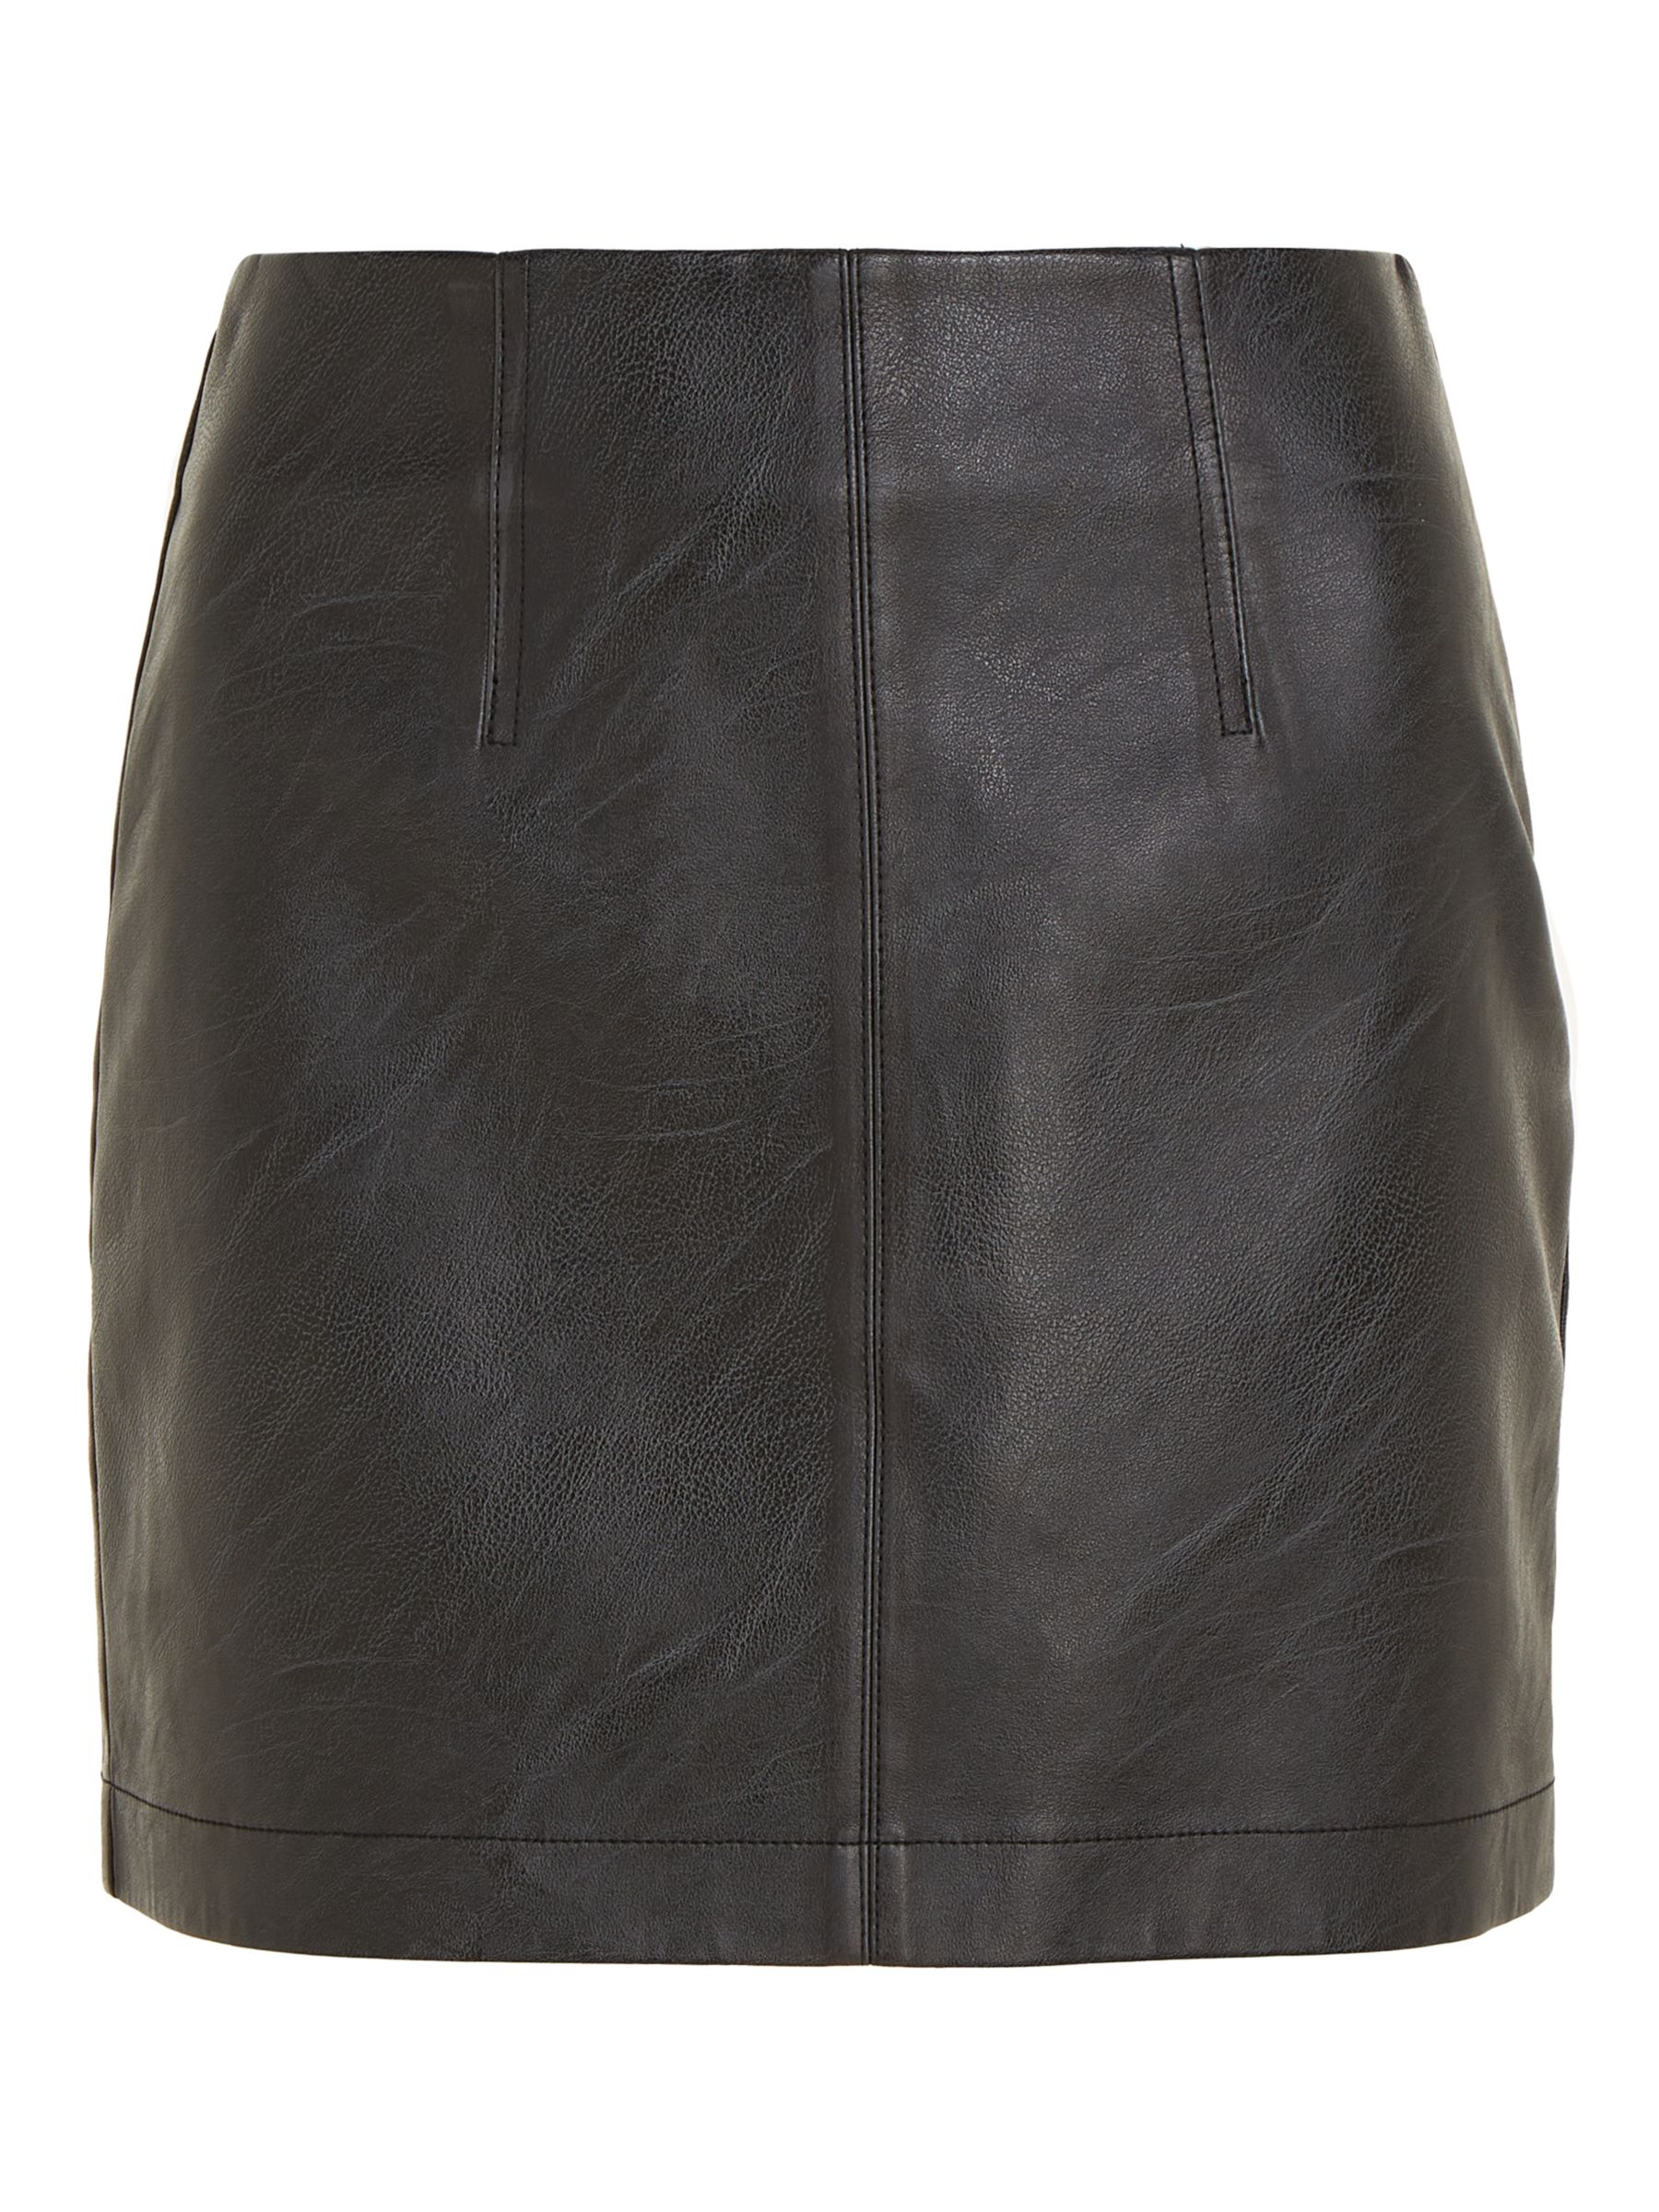 Calvin Klein Faux Leather Mini Skirt, Black at John Lewis & Partners